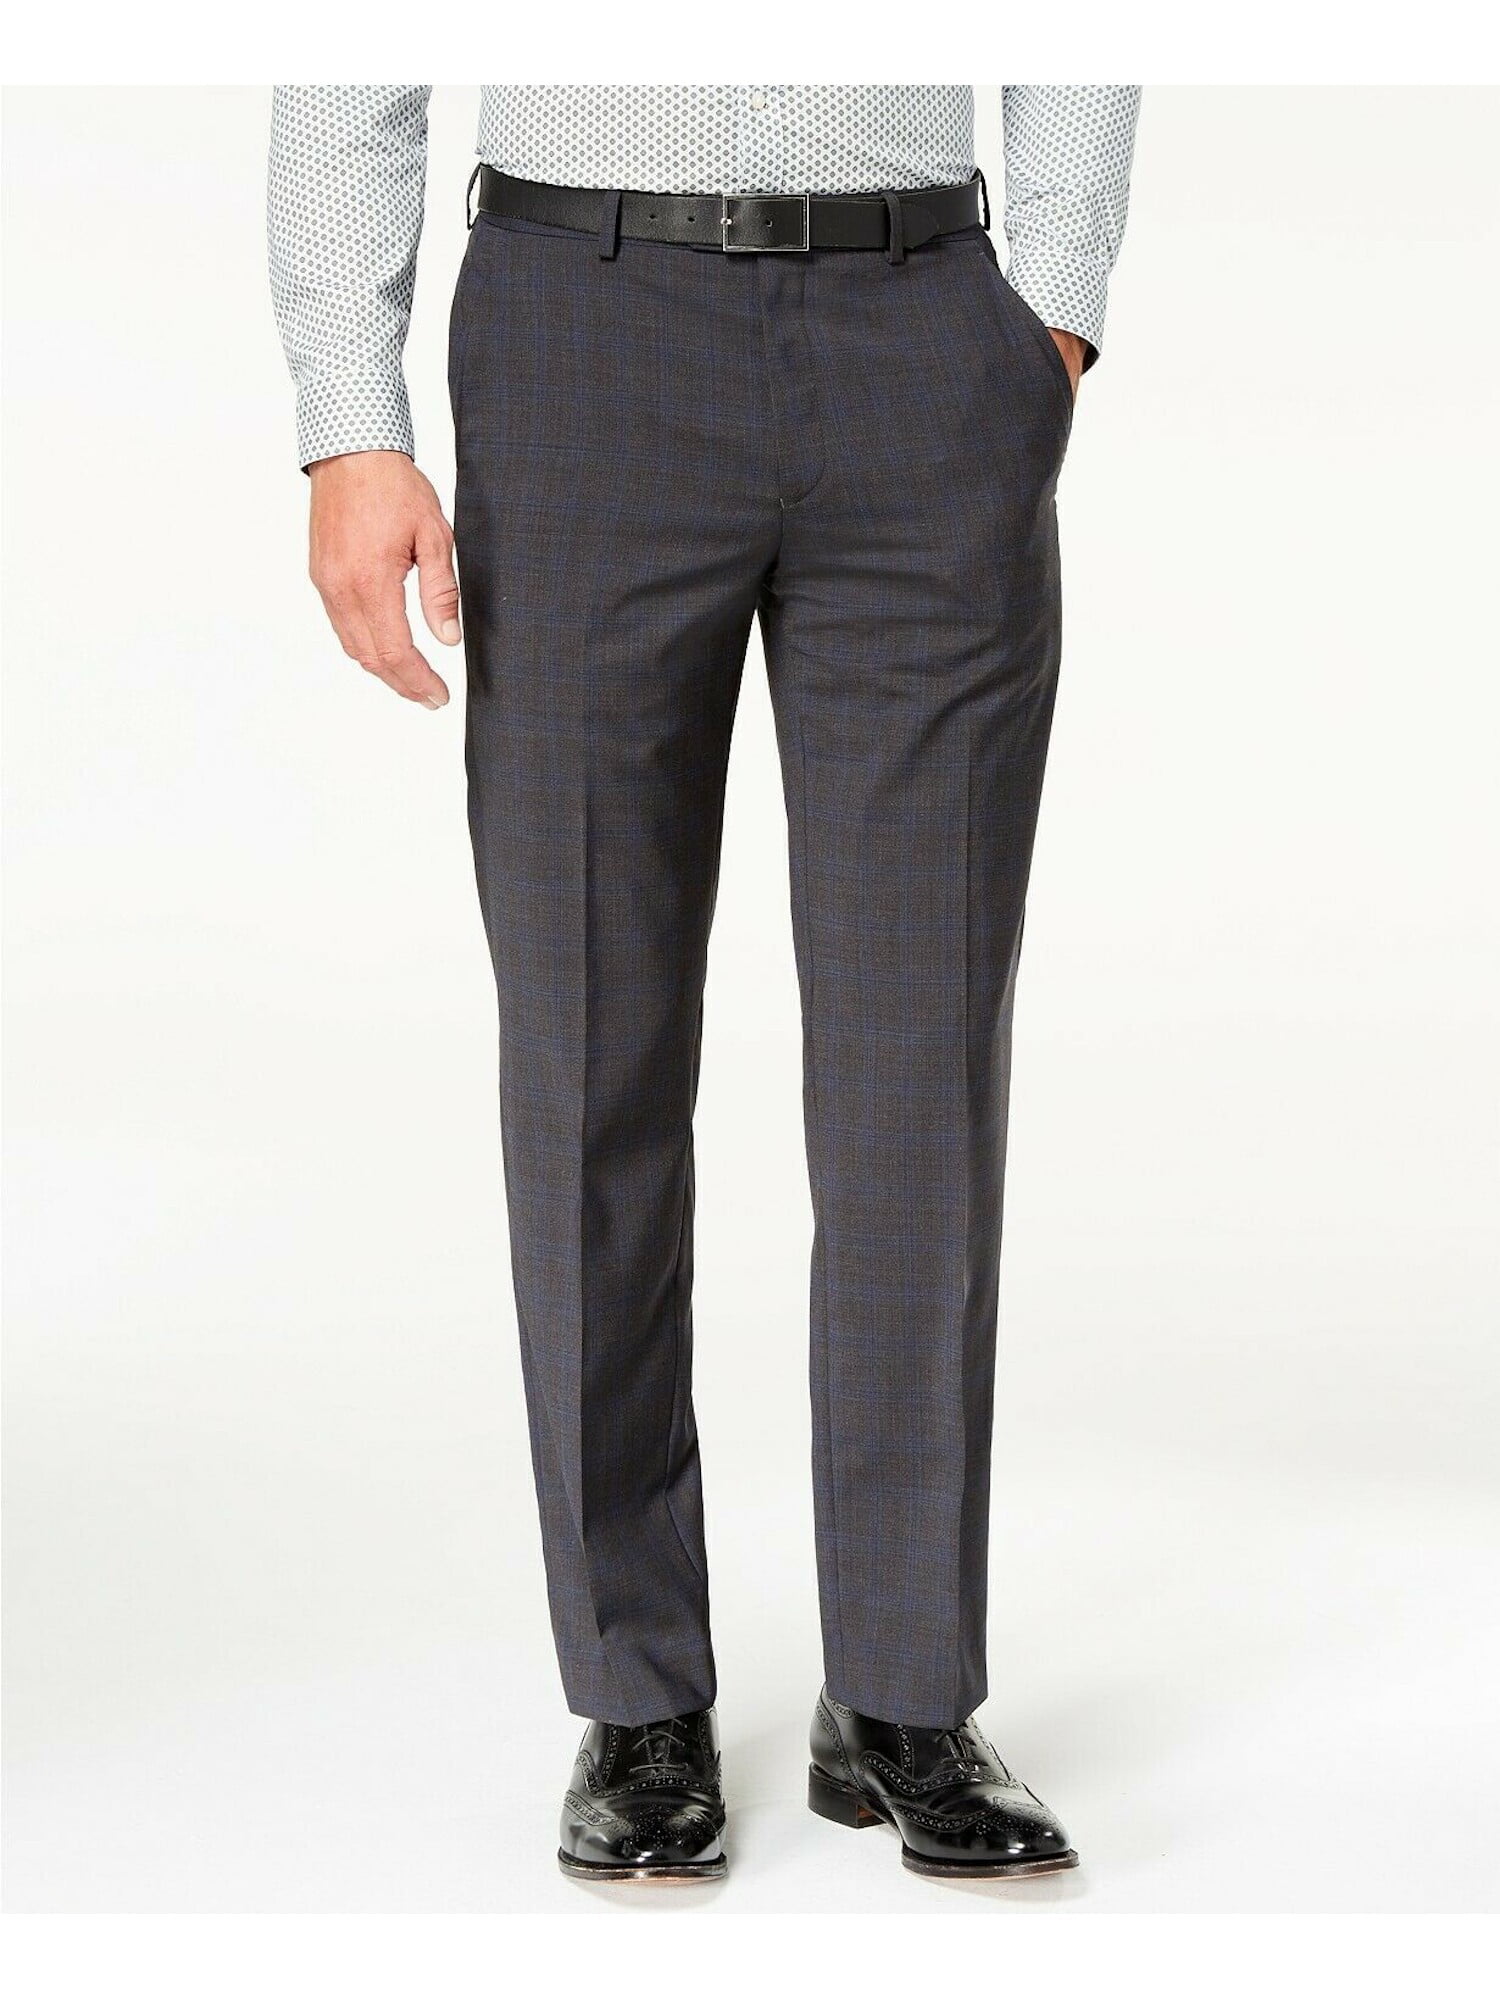 MICHAEL KORS Mens Gray Windowpane Plaid Classic Fit Suit Separate Pants 44W  /30L 